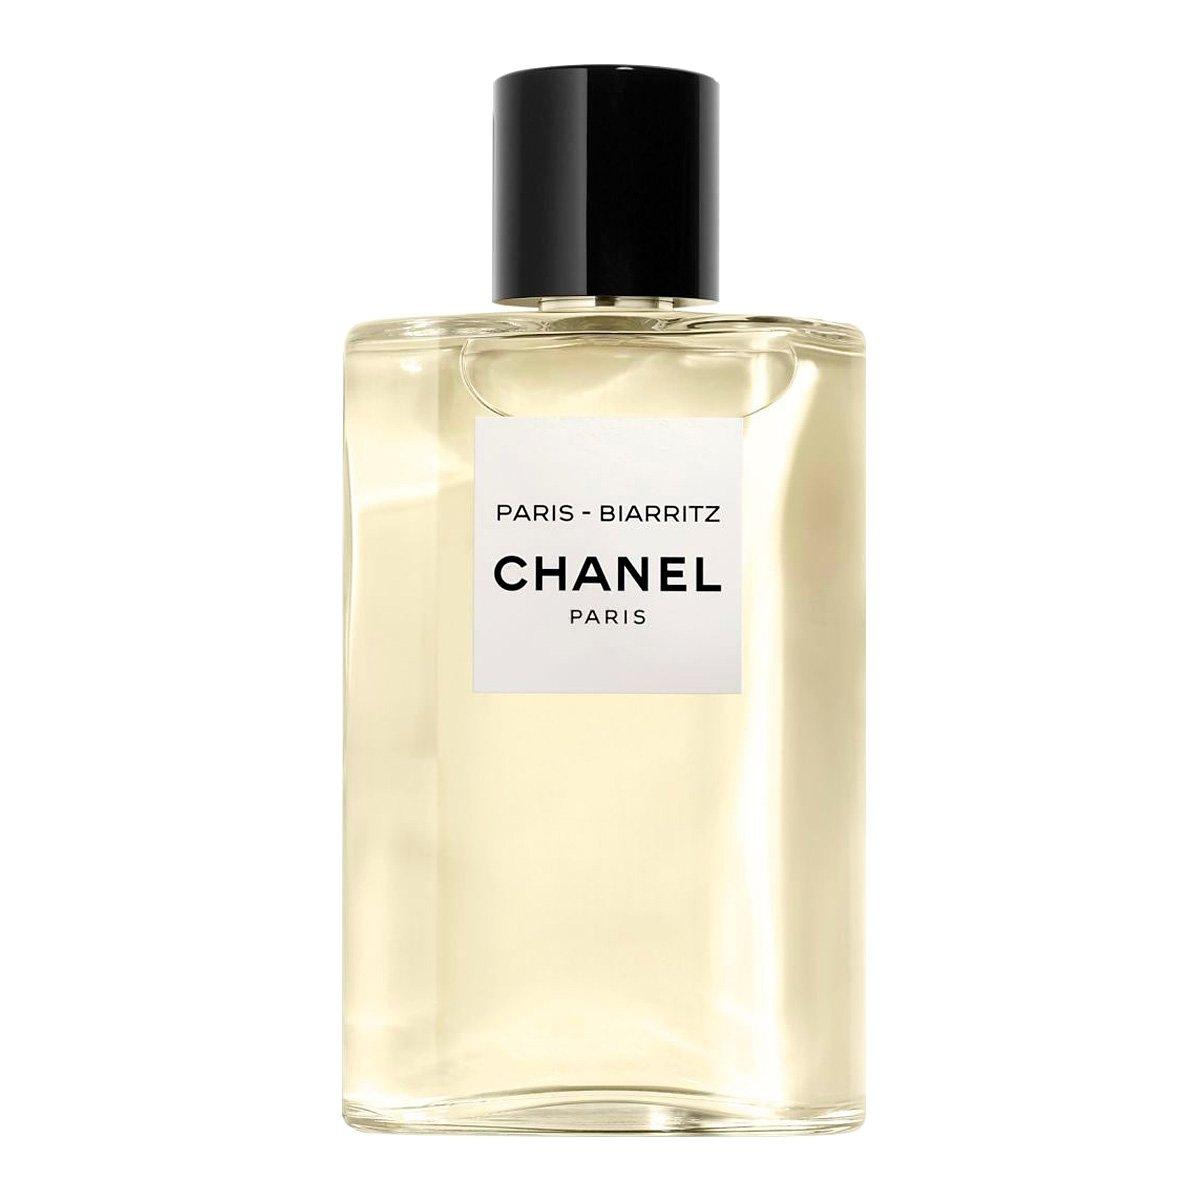 Chanel Paris – Biarritz Туалетная вода унисекс (125 ml) (копия)